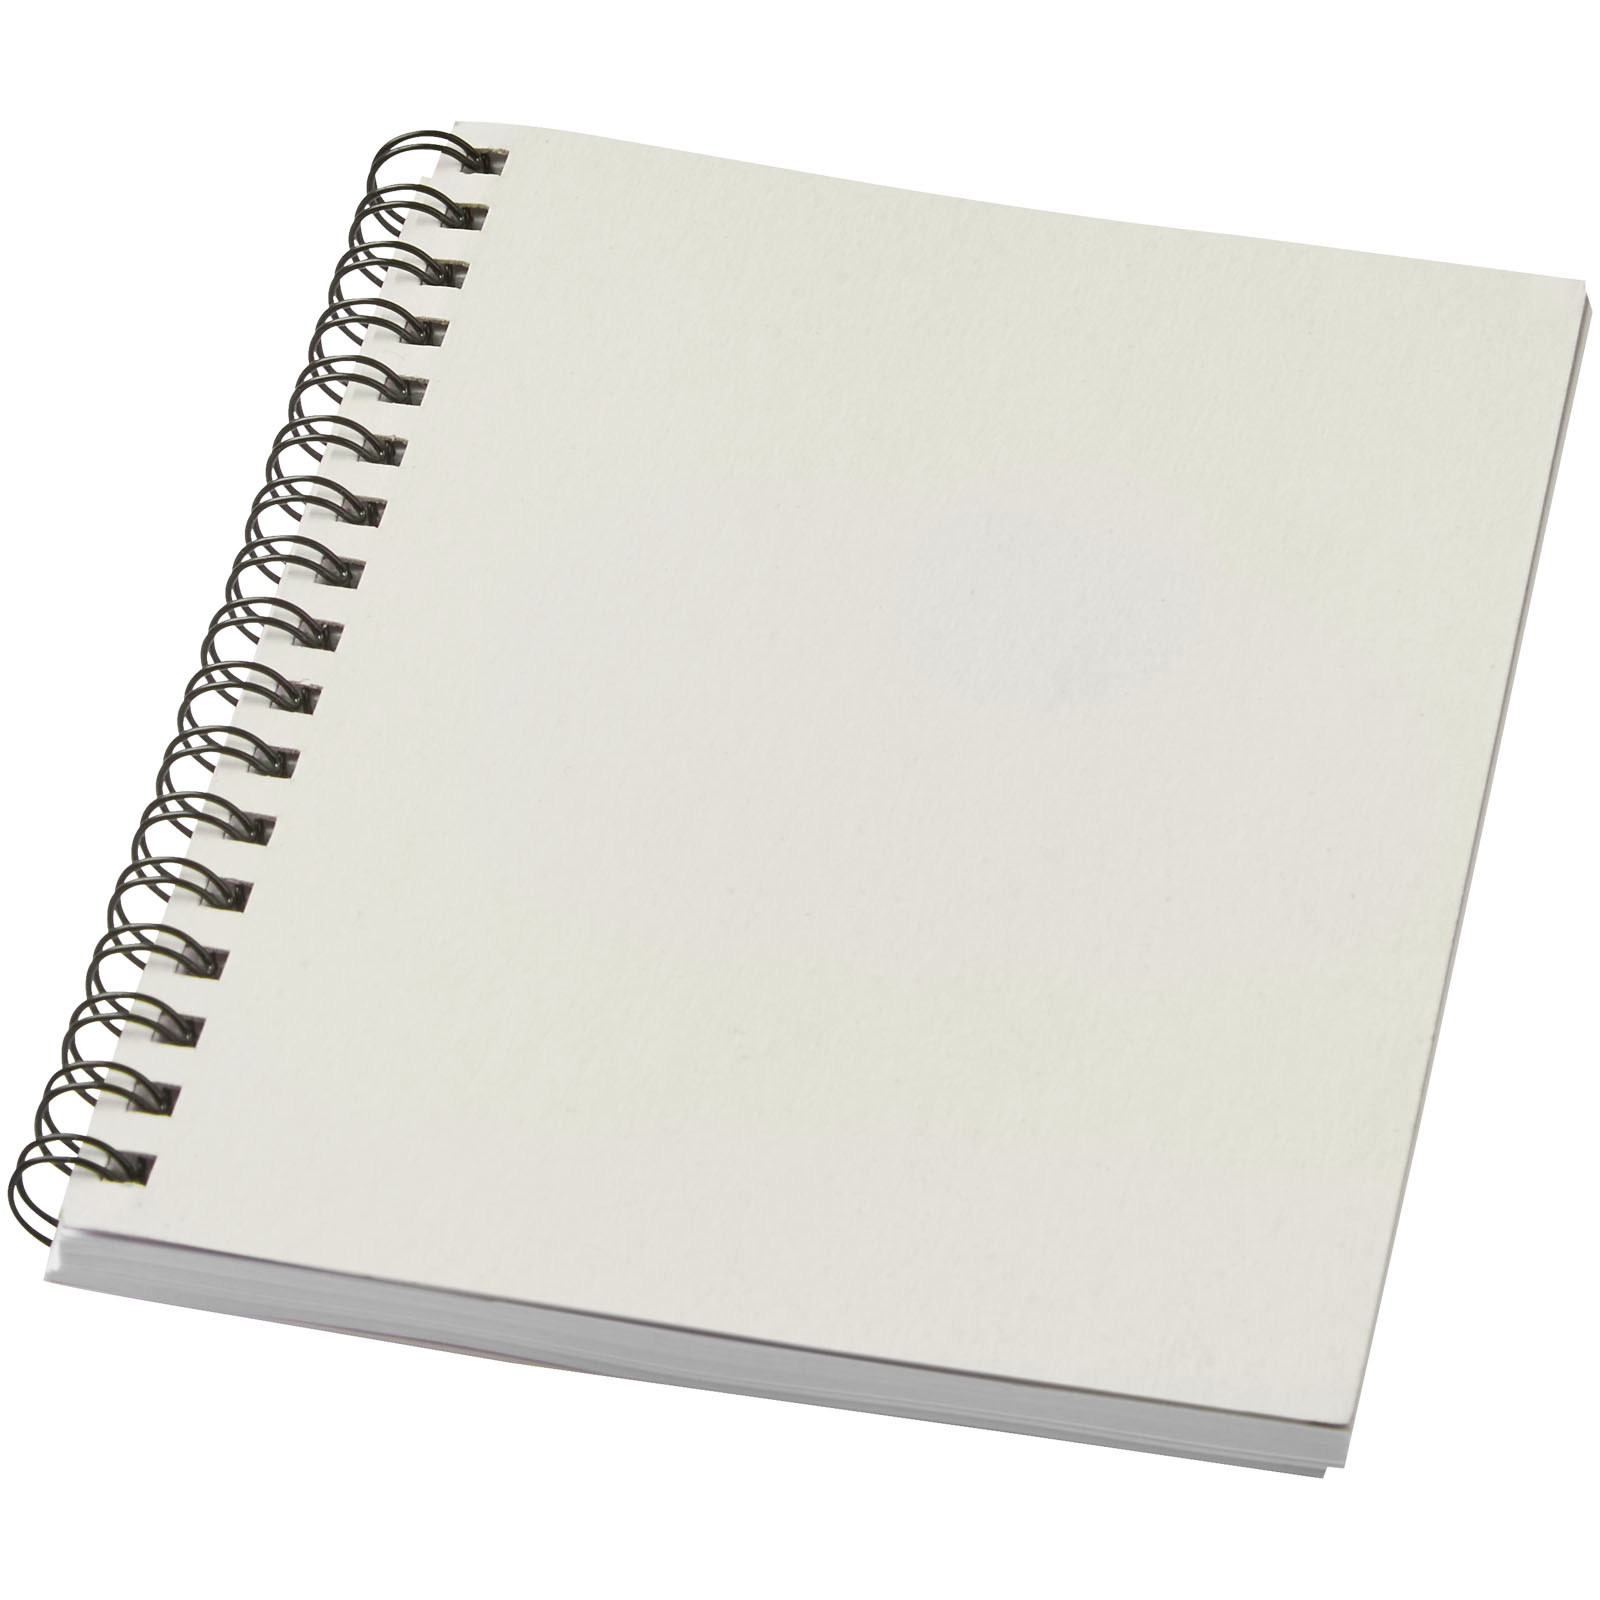 Soft cover notebooks - Desk-Mate® A6 colour spiral notebook